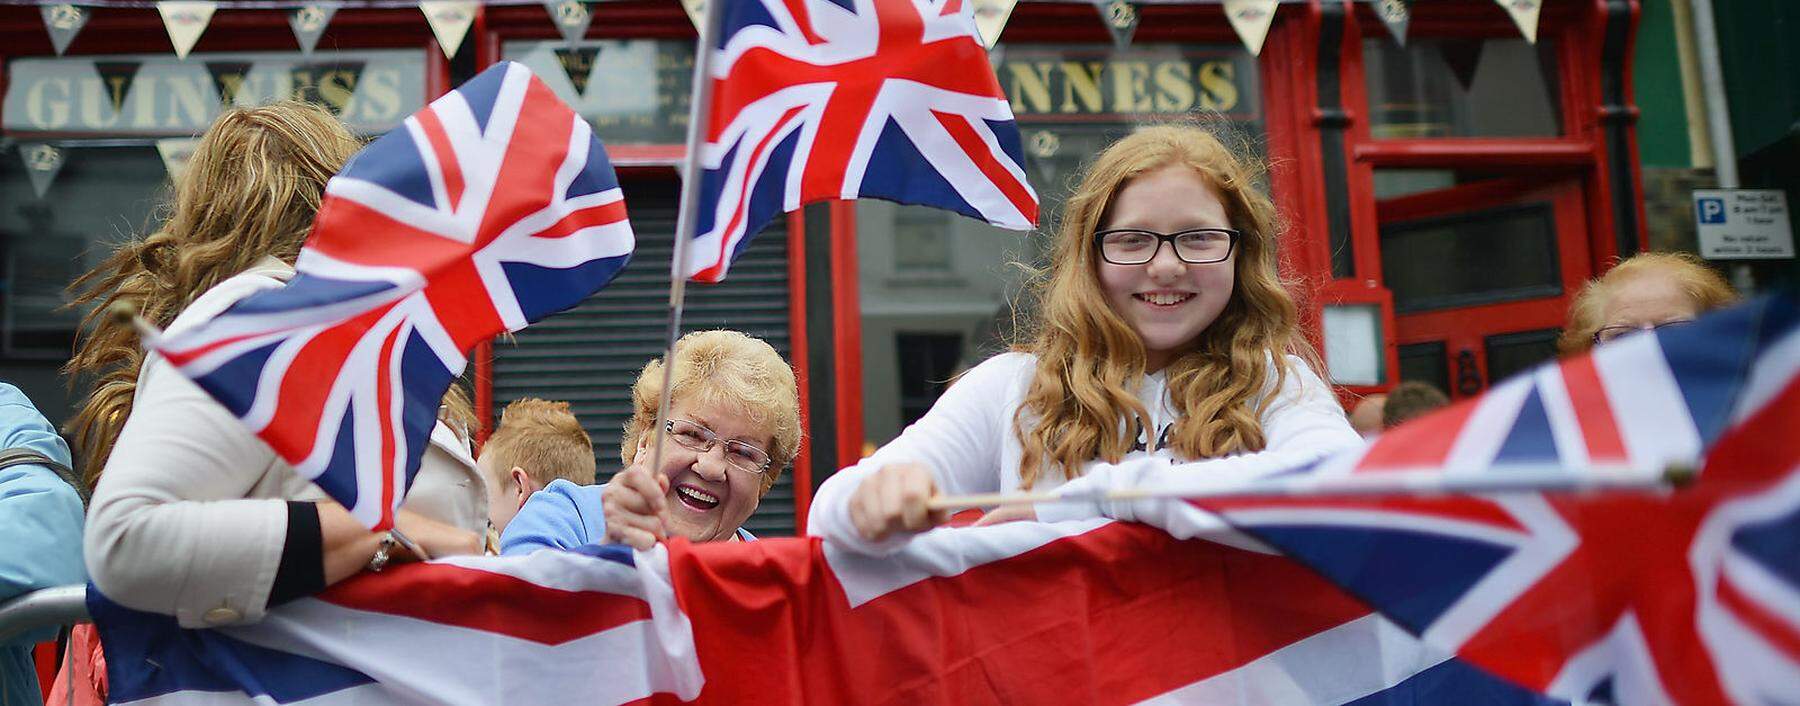 Queen Elizabeth II And Prince Philip, Duke Of Edinburgh Visit Northern Ireland - Day 1